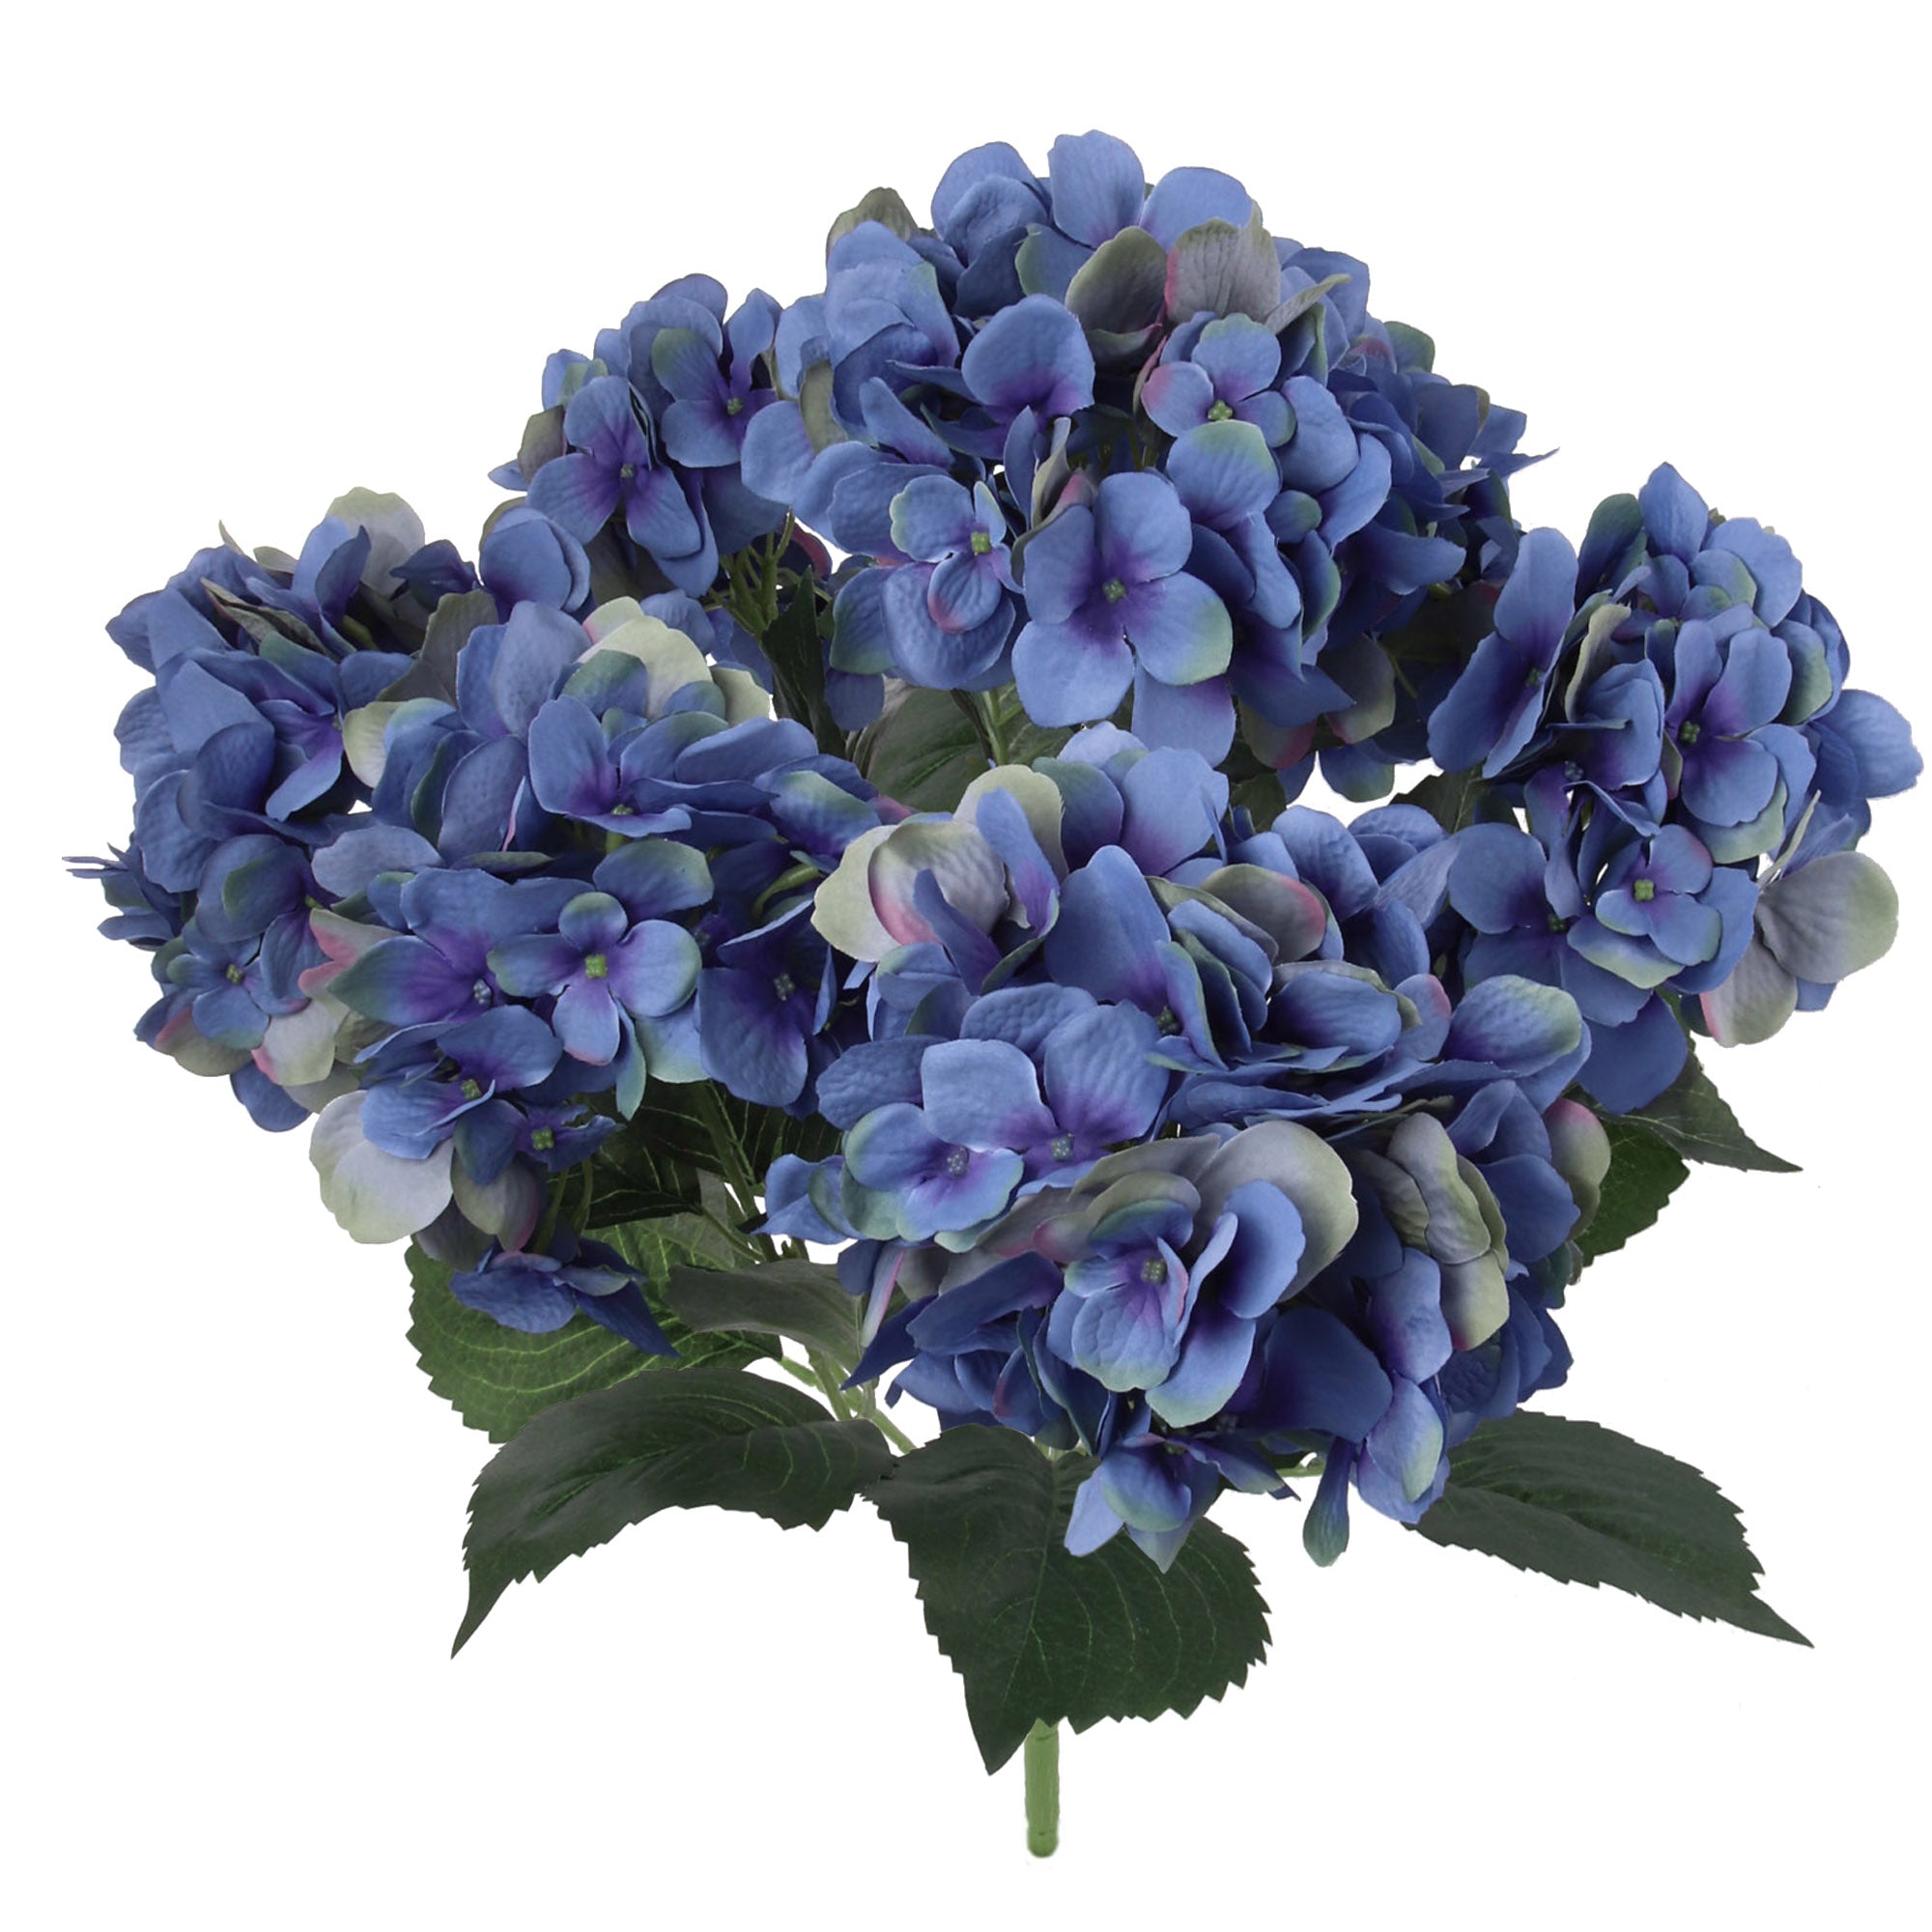 Captivating 20" Pink Blue Hydrangea Bush - Premium Artificial Flowers for Home, Top Wedding Centerpieces & Lovely Arrangements